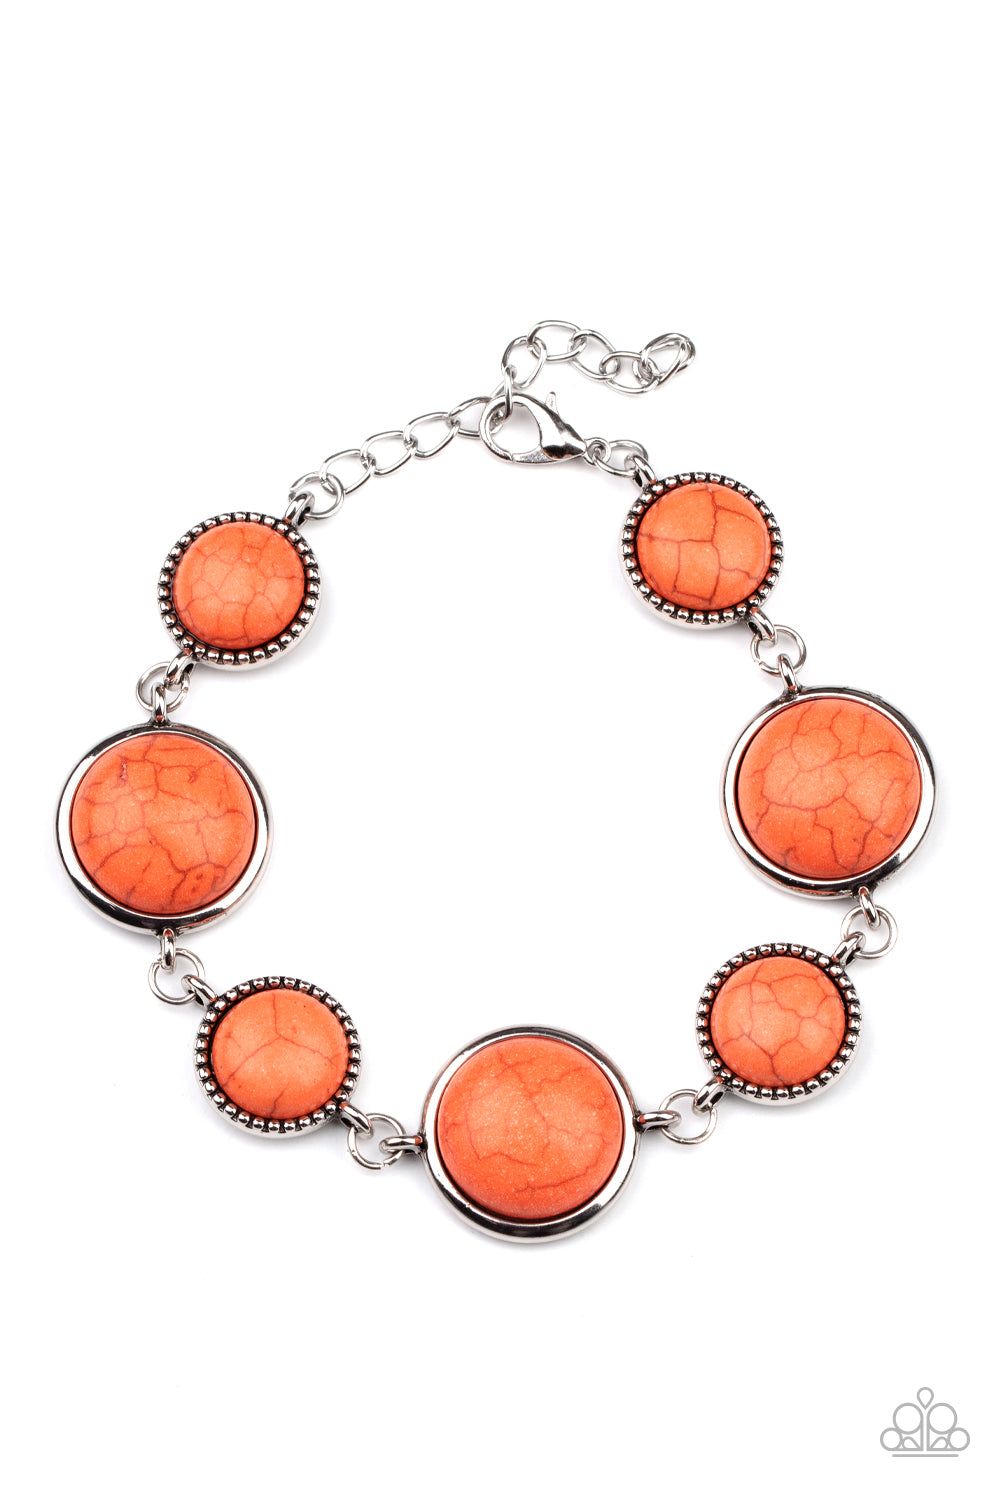 Terrestrial Trailblazer - Orange necklace w/ matching bracelet